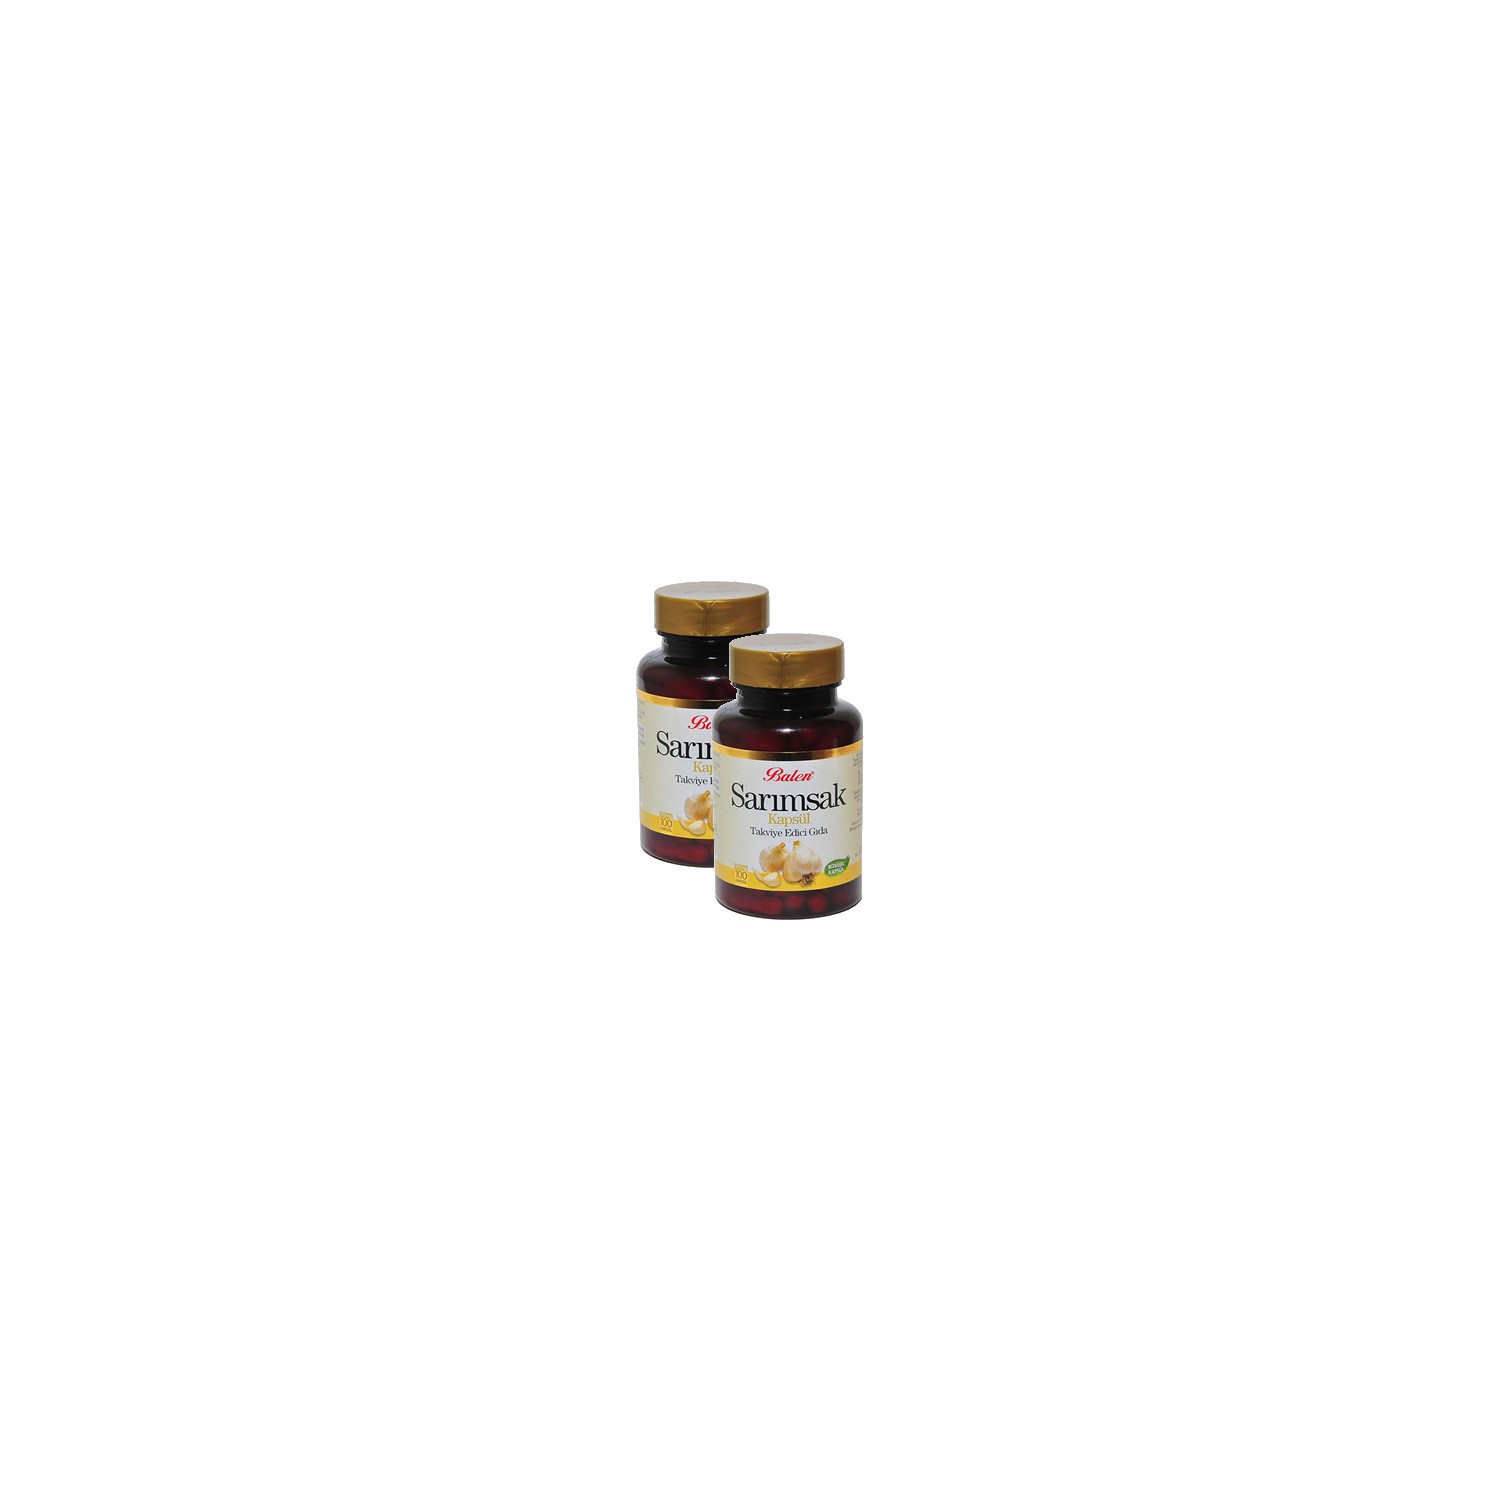 d aspartic acid capsules 120 капсул Пищевая добавка Balen Garlic 300 мг, 2 упаковки по 100 капсул